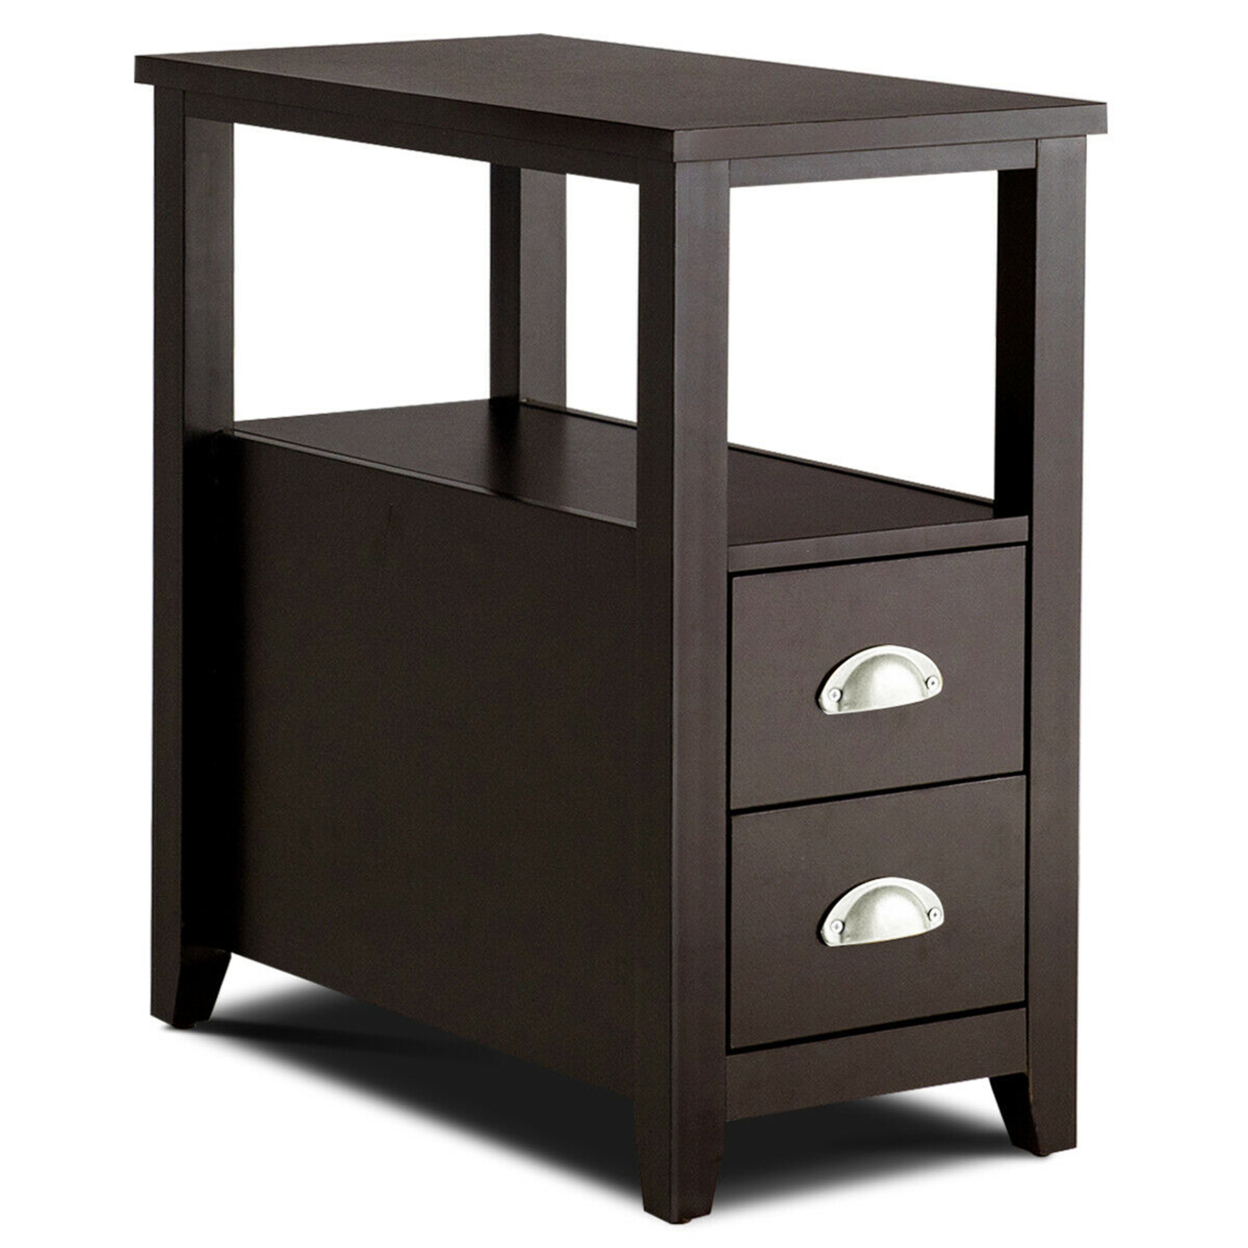 End Table Space-Saving Rectangular Bedside Table W/ 2 Drawers & Shelf Espress